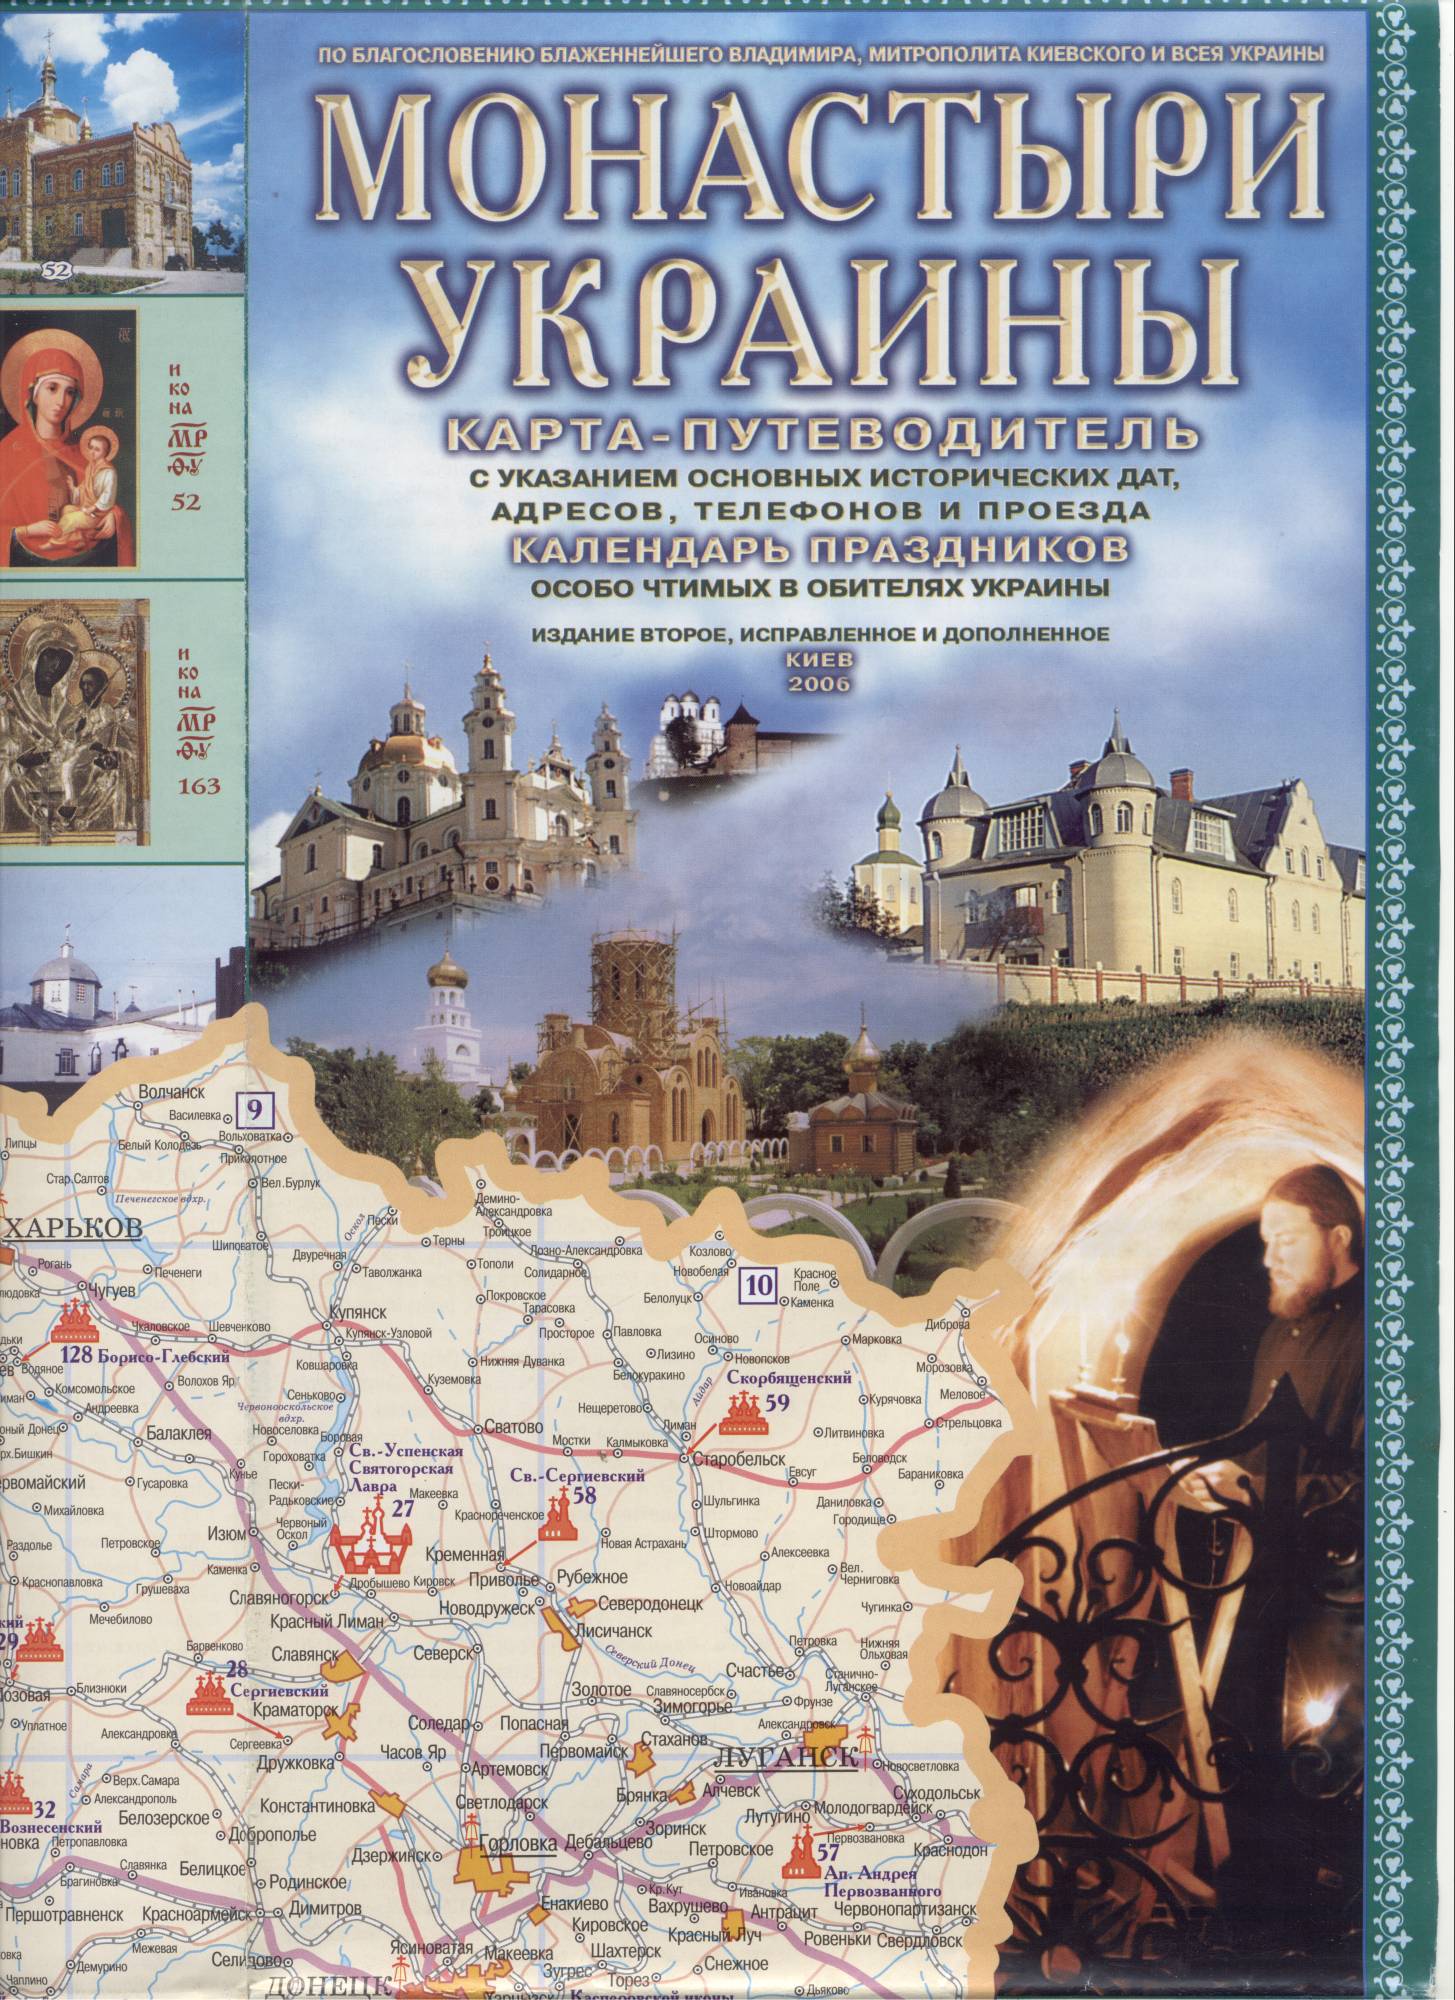 Orthodox monasteries on the map of Ukraine, E0